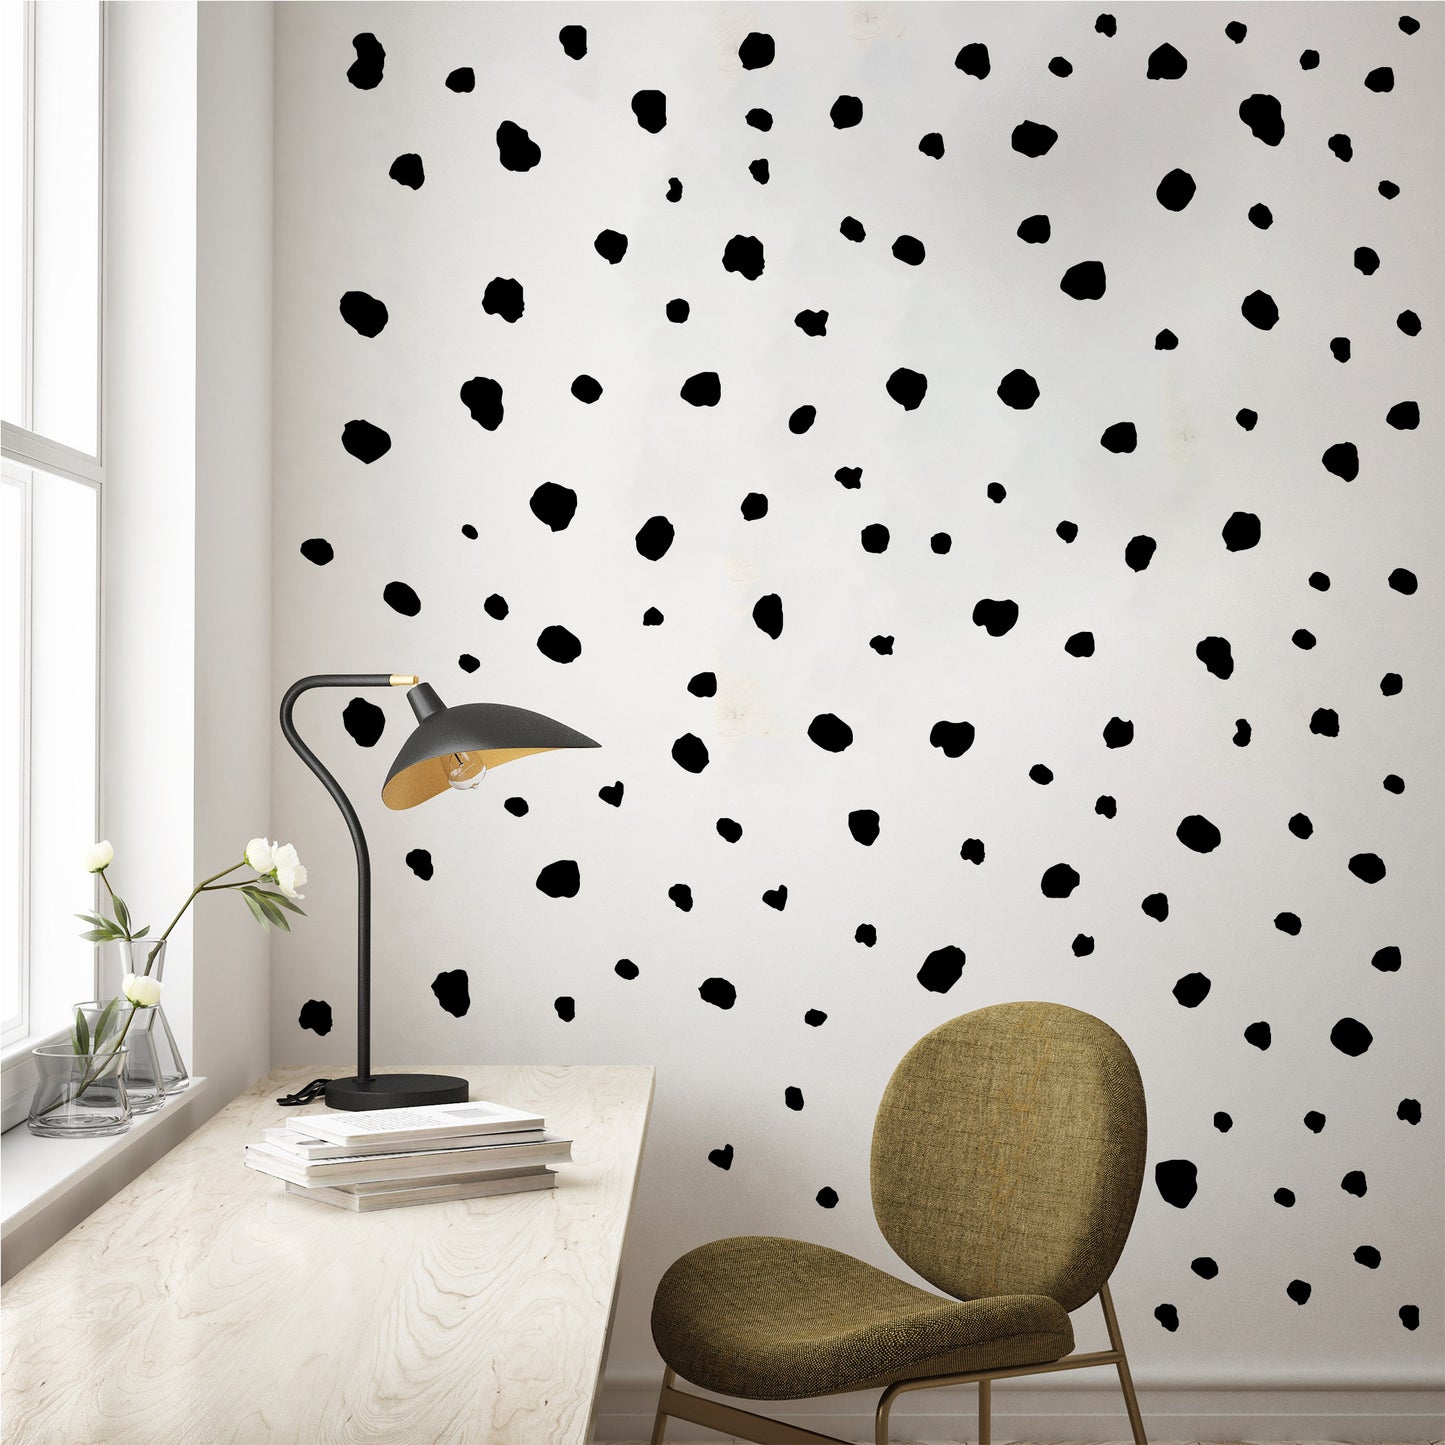 Dalmatian Wall Stickers from restowrap